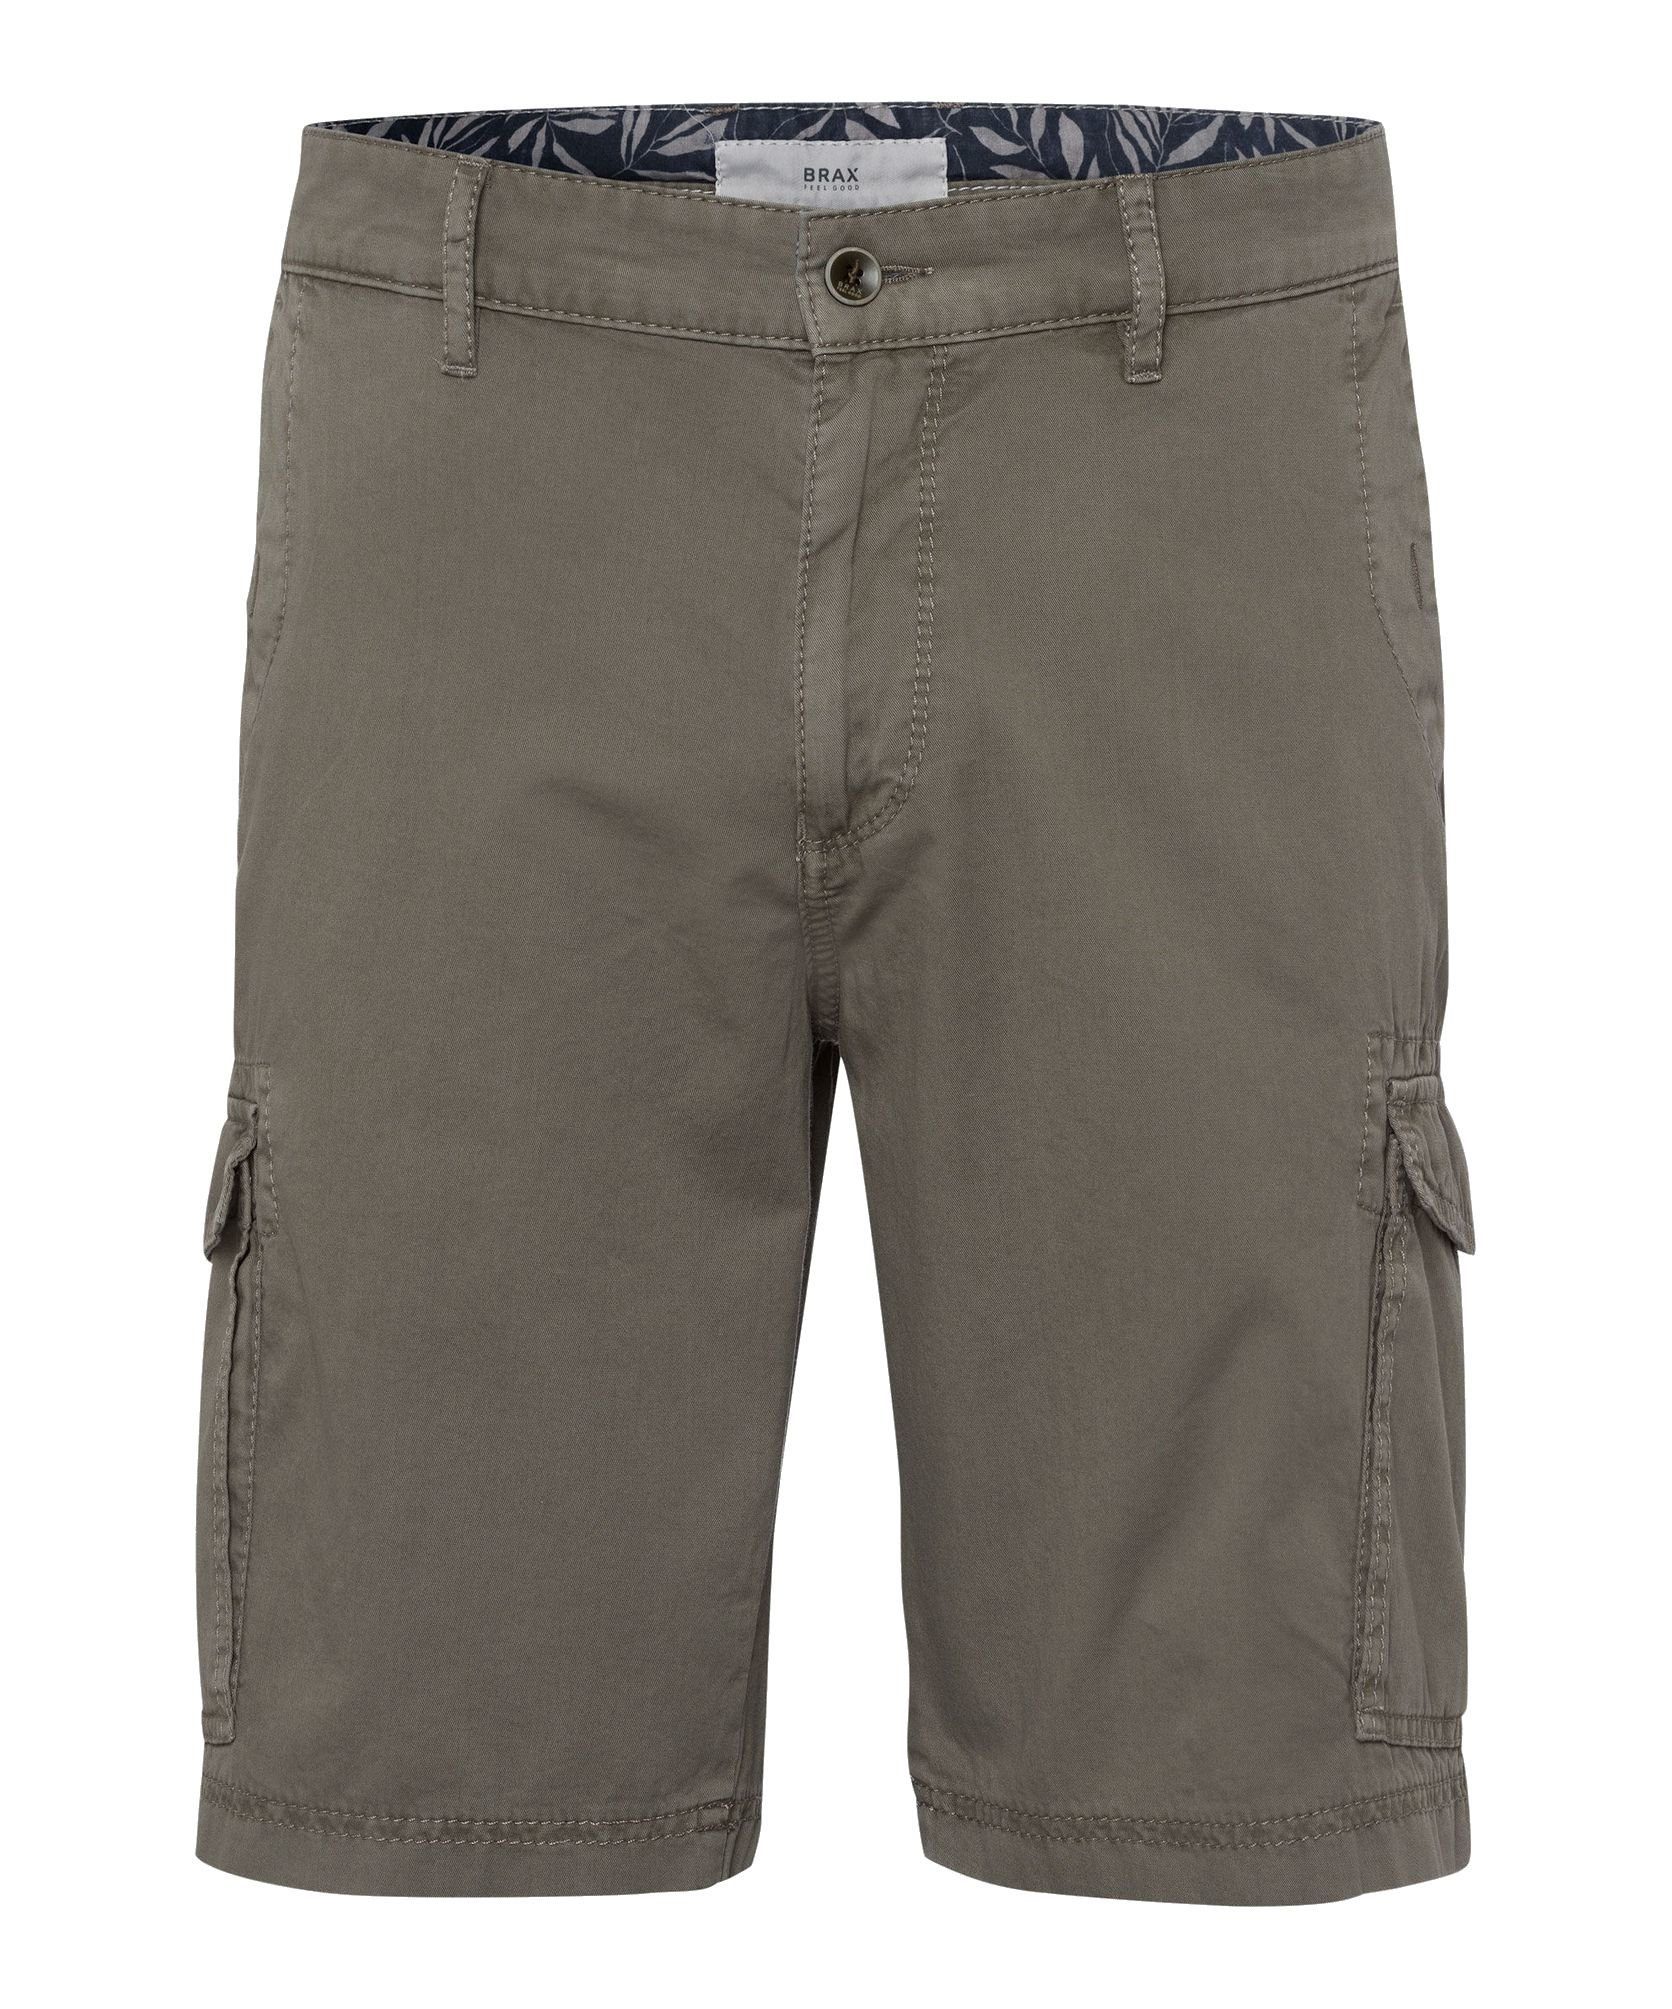 Brax Shorts Style Brazil Khaki (32) (82-6858)